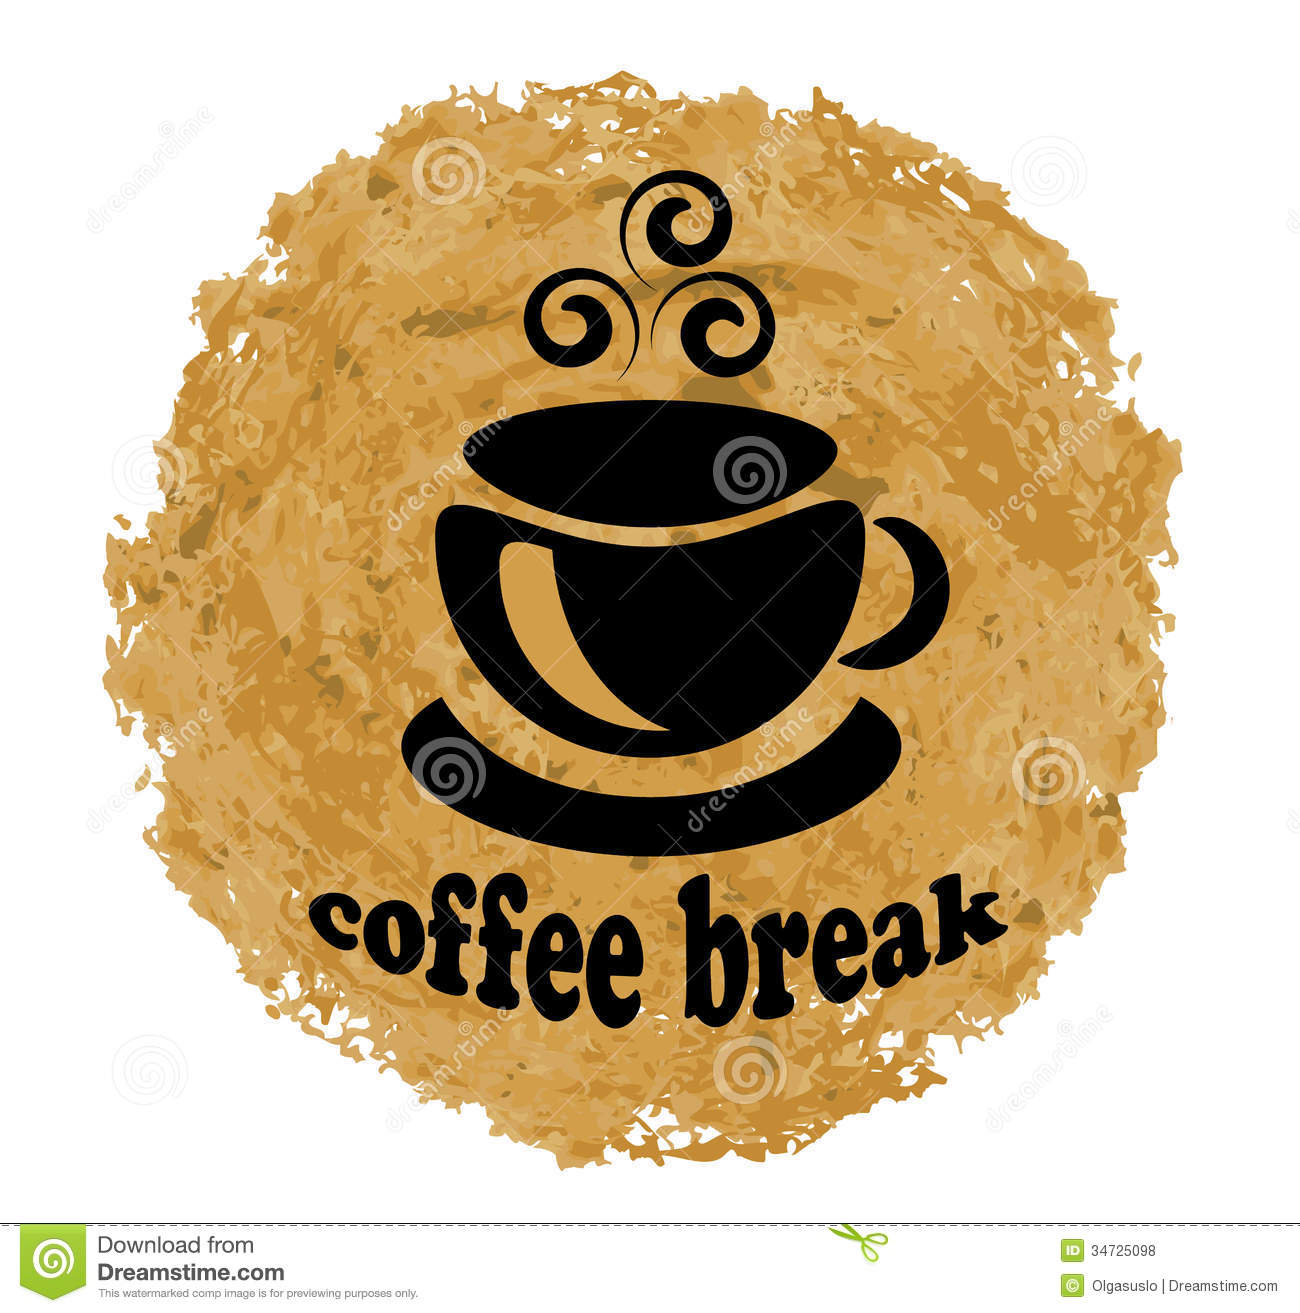 coffee-break-abstract.jpg